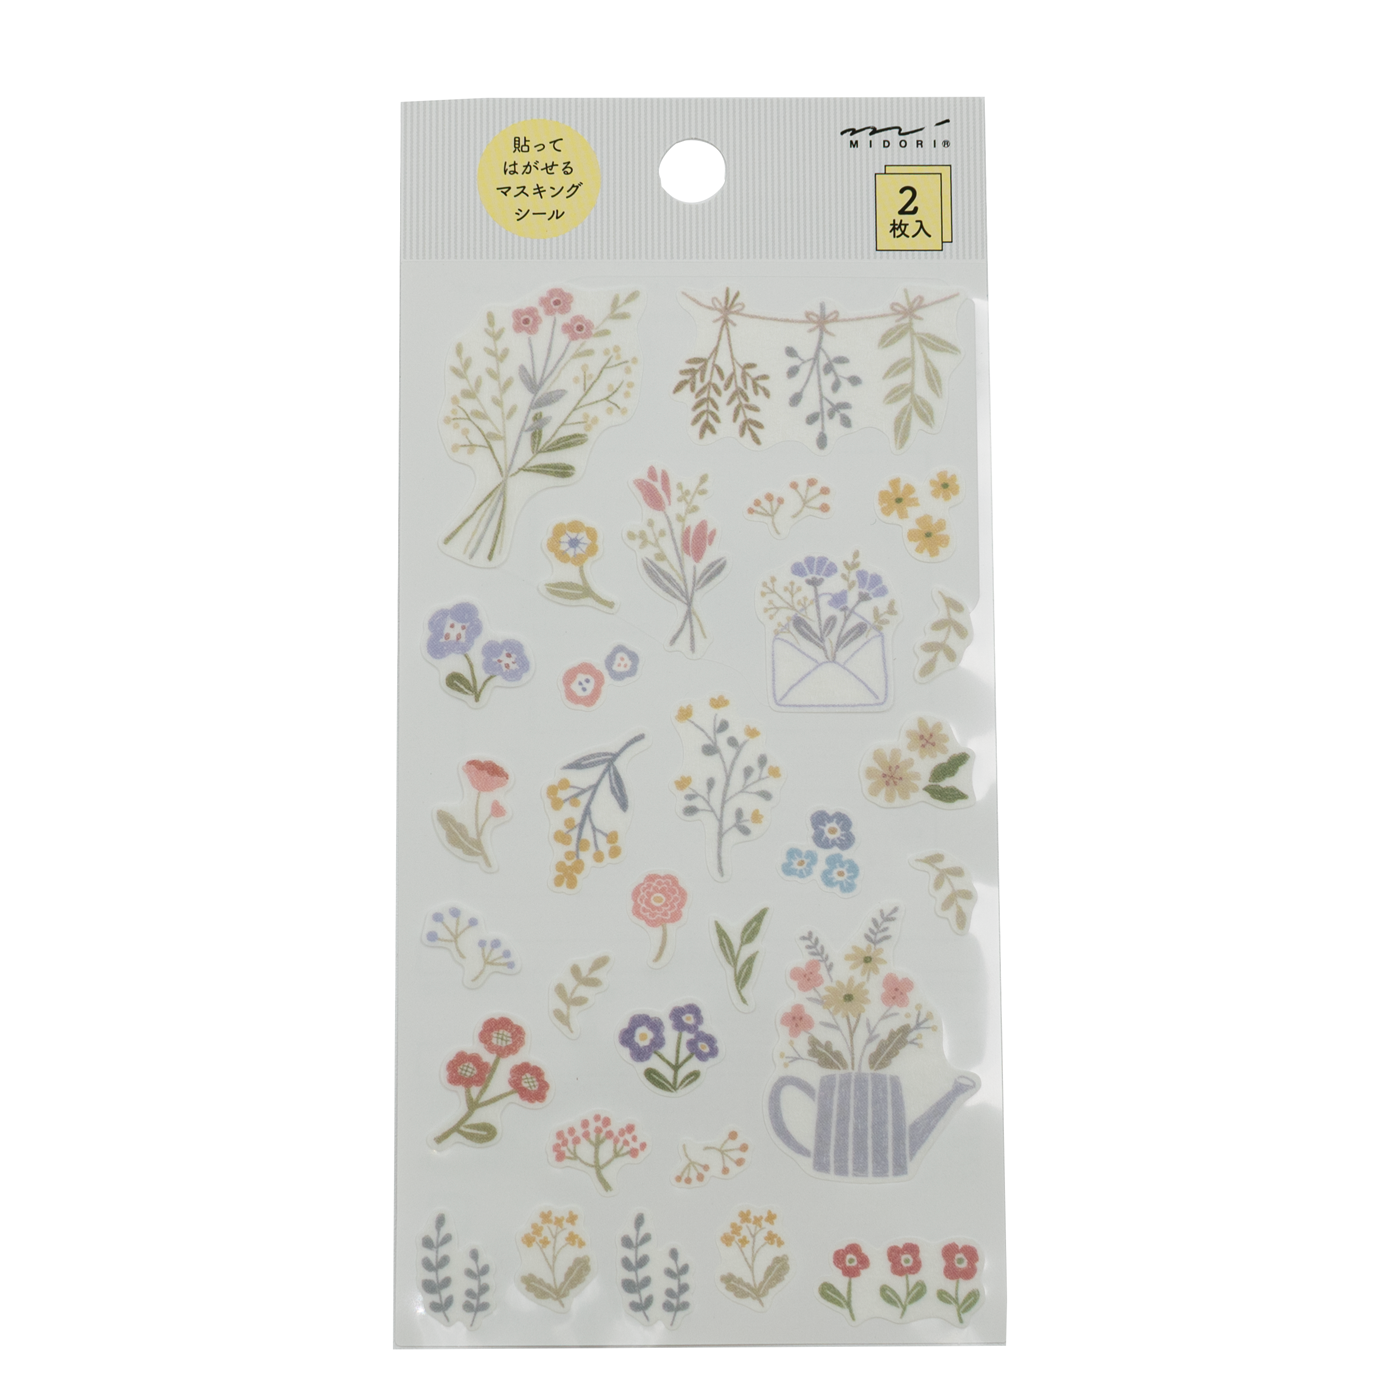 Midori Notebook Stickers - Flower